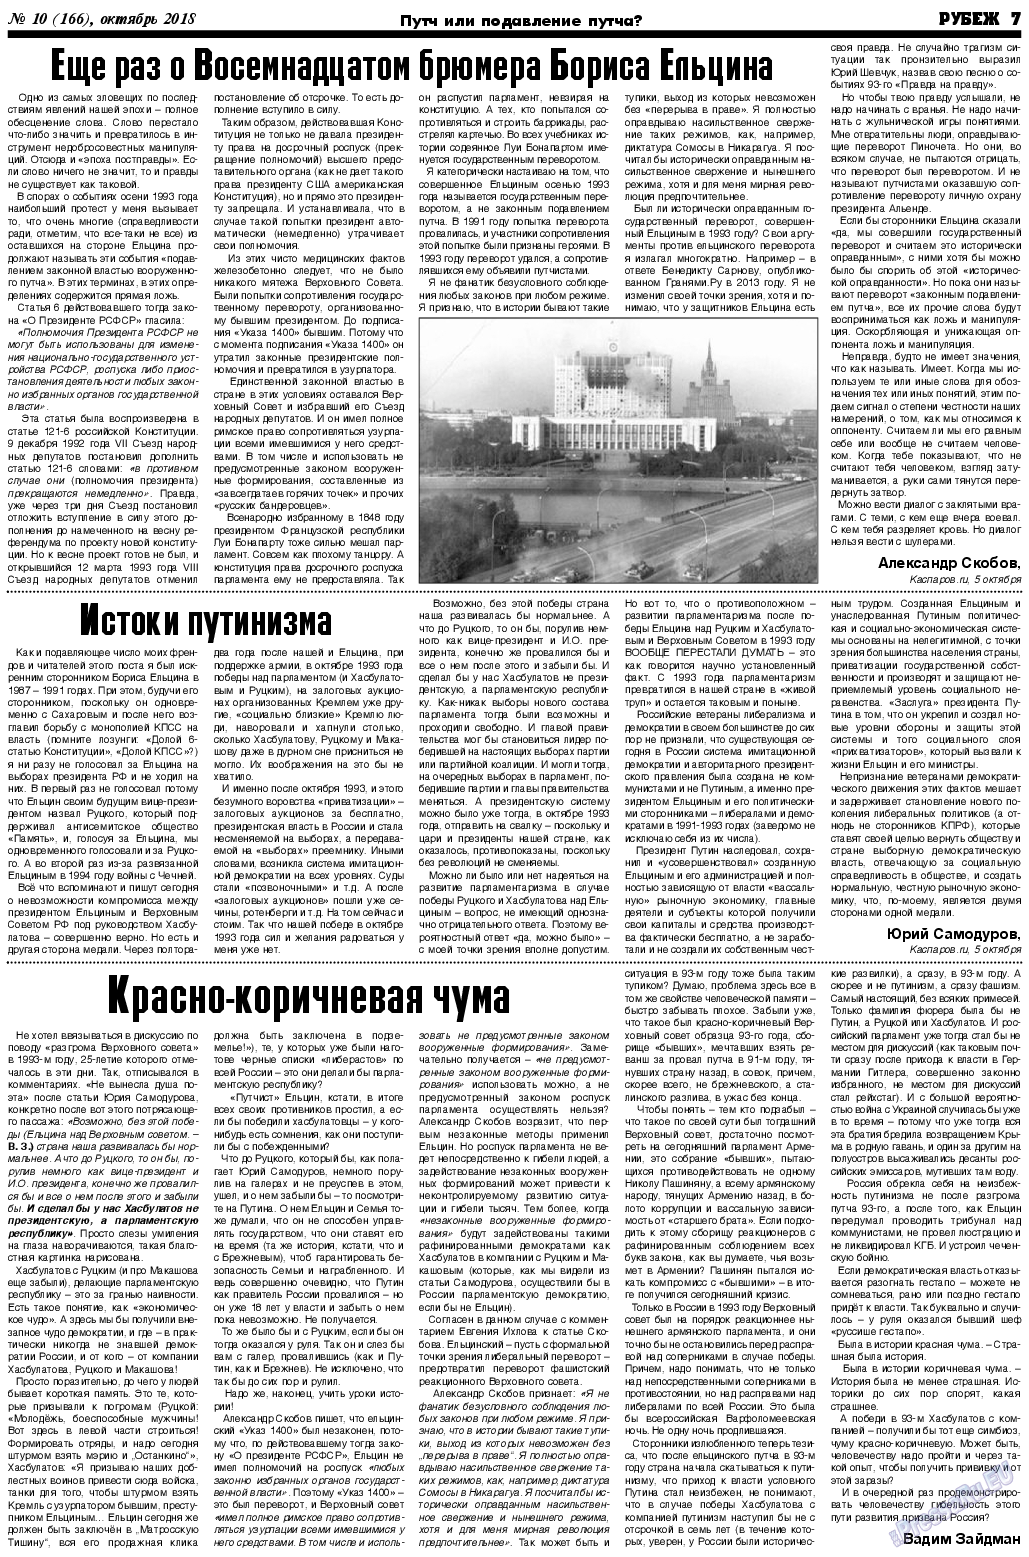 Рубеж, газета. 2018 №10 стр.7